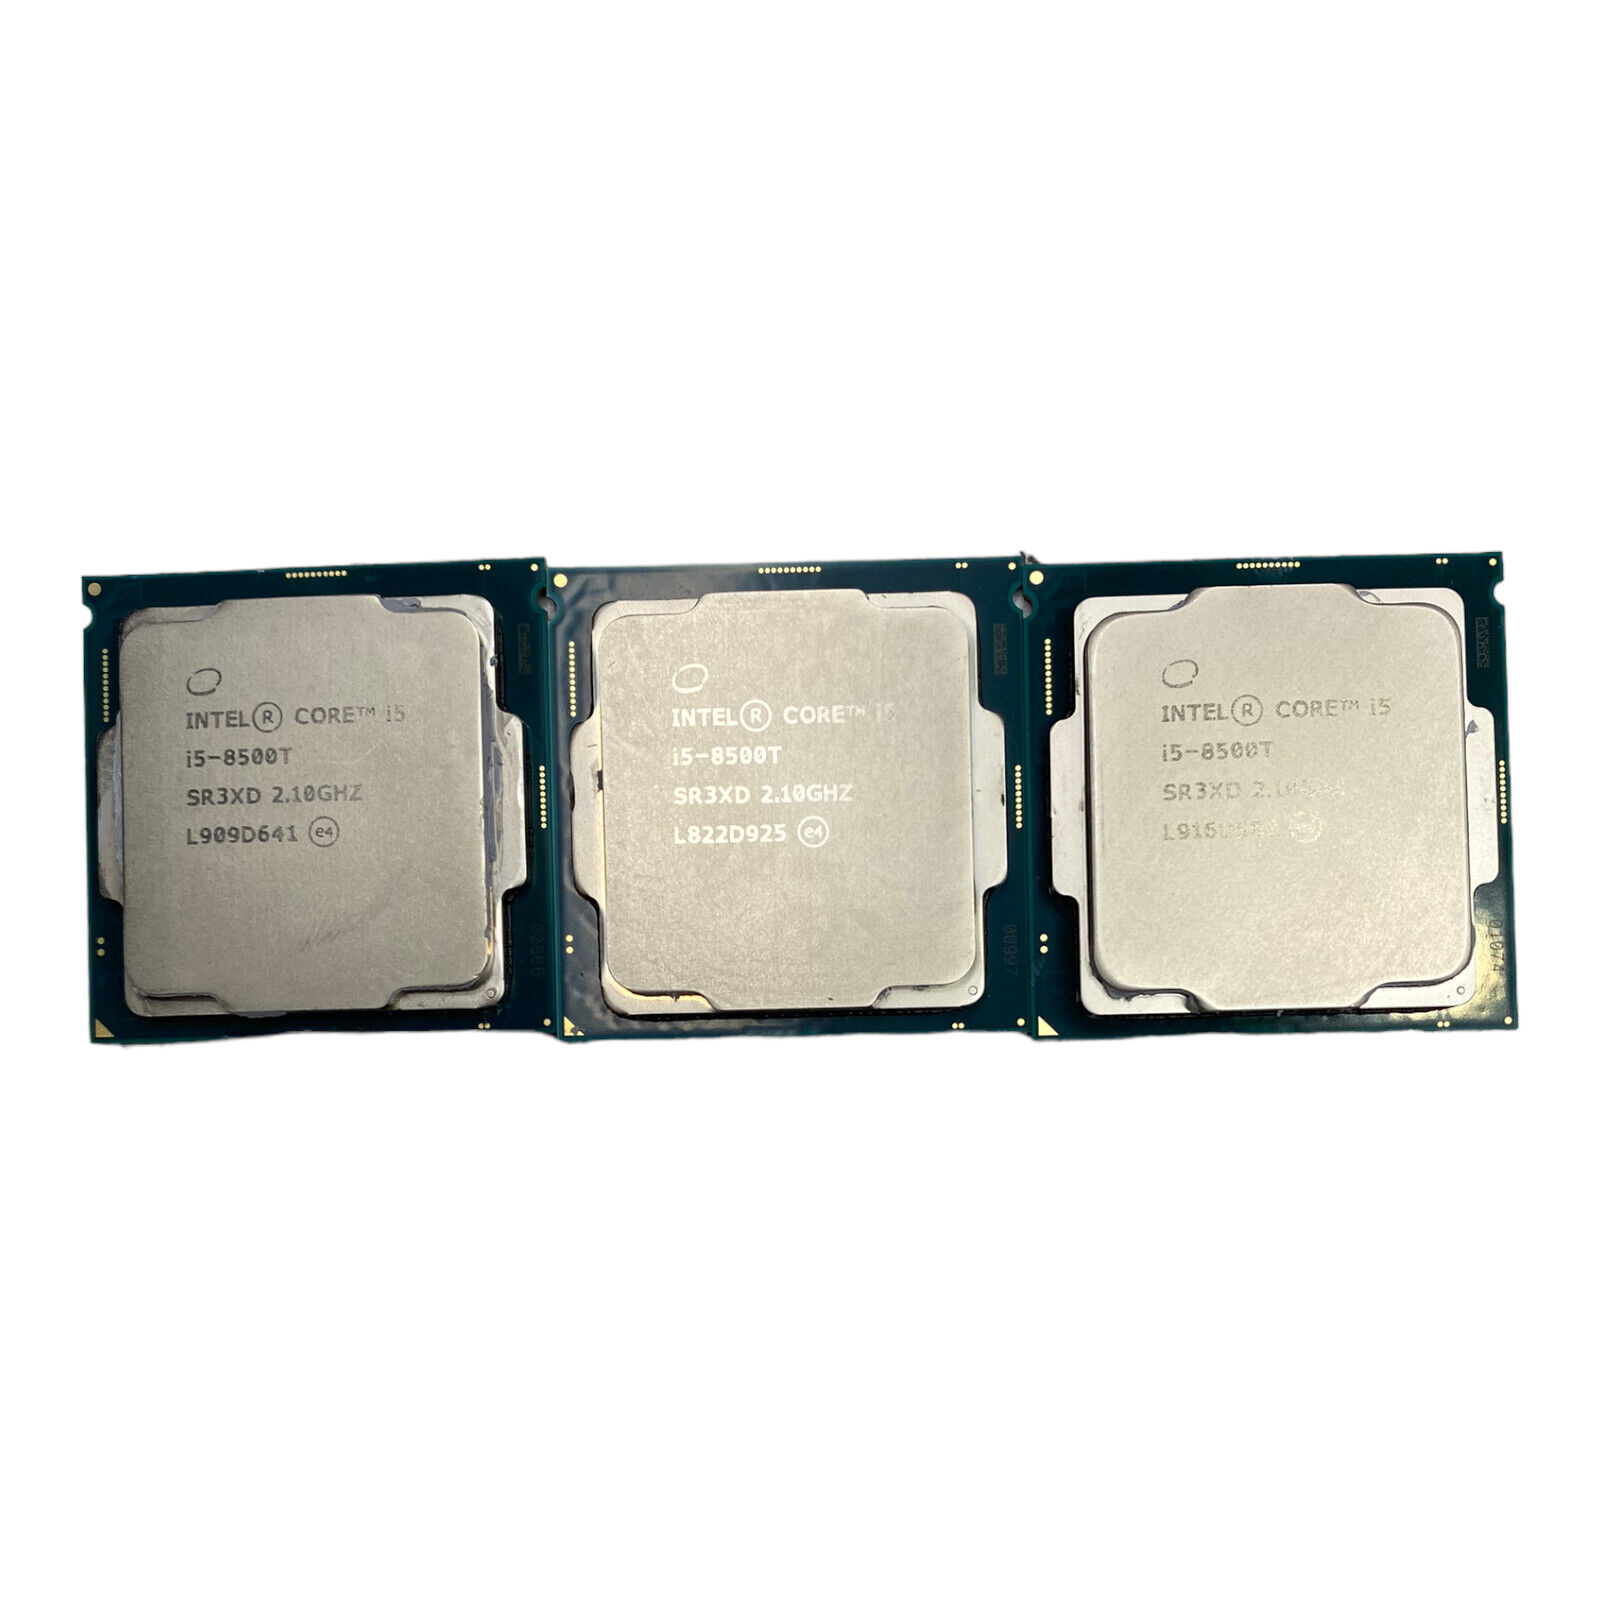 LOT OF 3 Intel Core i5-8500T 2.10GHz SR3XD LGA1151 CPU Processor